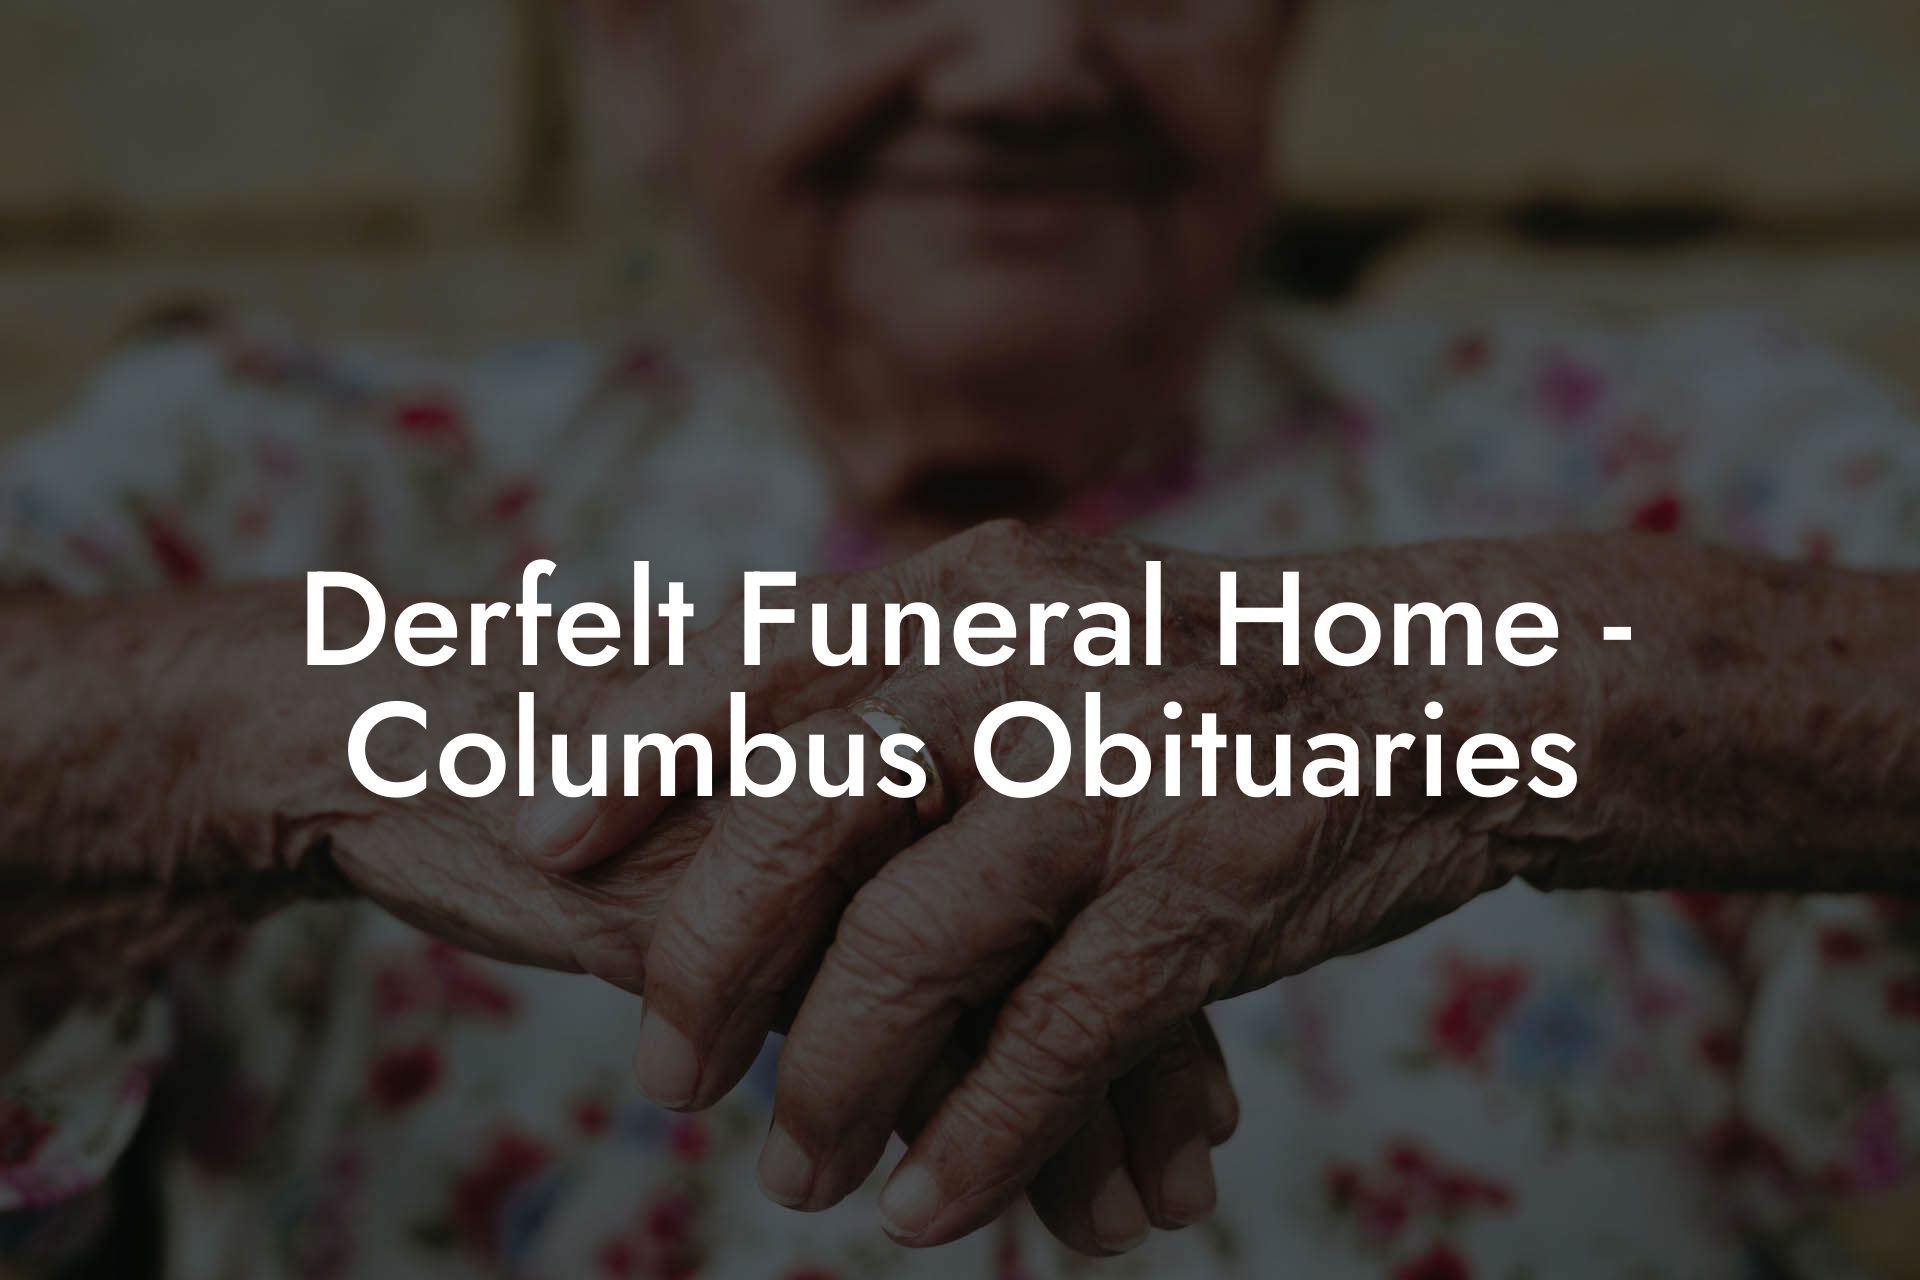 Derfelt Funeral Home - Columbus Obituaries